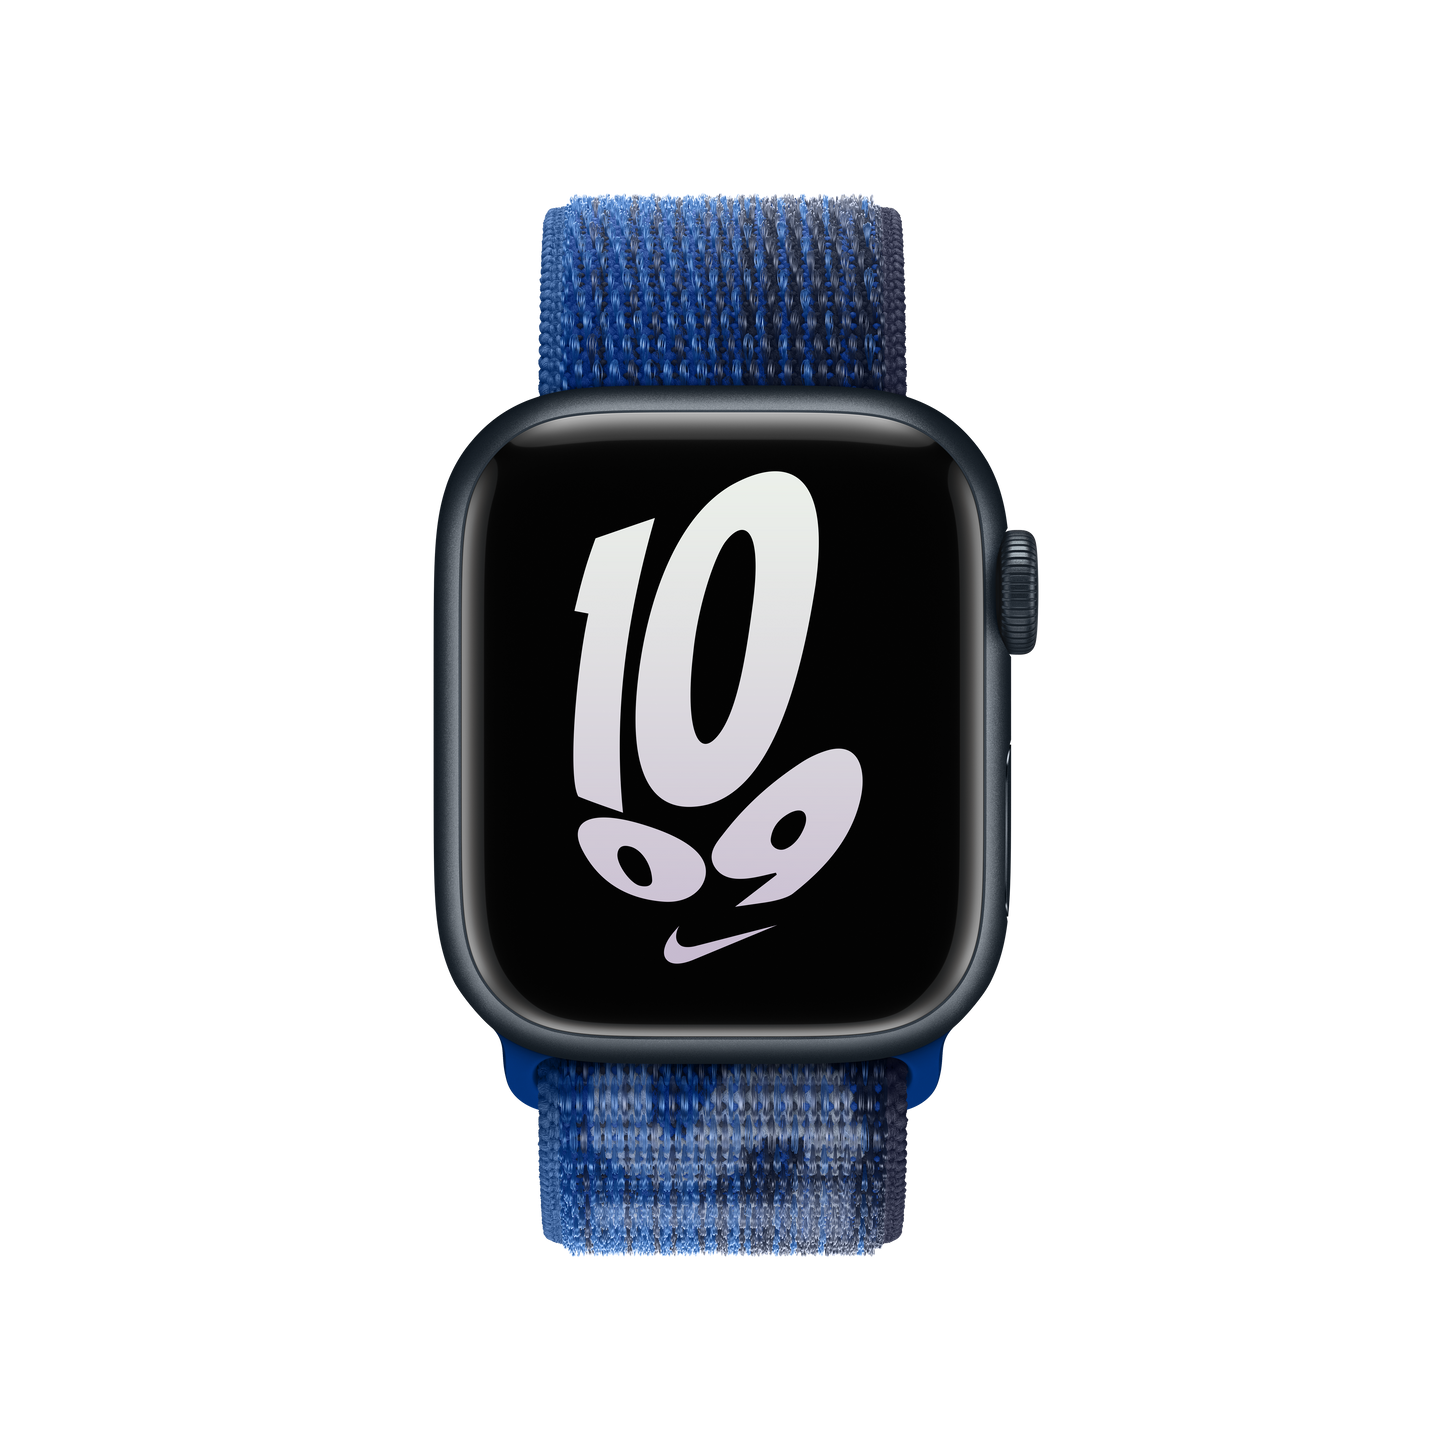 Correa Loop Nike Sport en color Game Royal/azul marino noche (41 mm) - Rossellimac